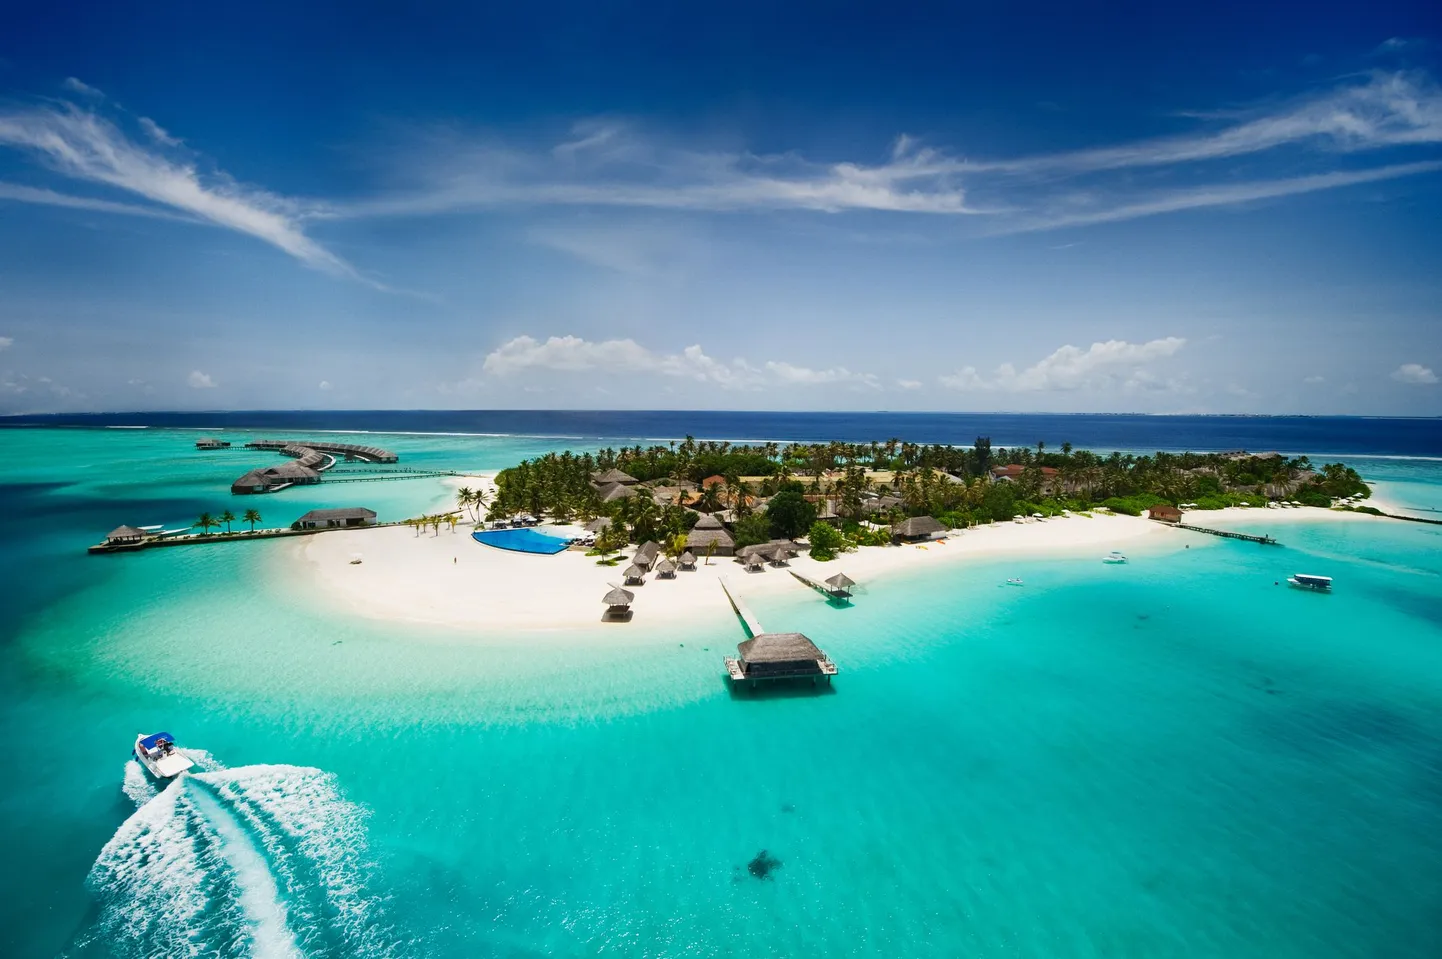 Eesti inimese unistuste sihtkohaks on Maldiivide paradiisisaarestik.